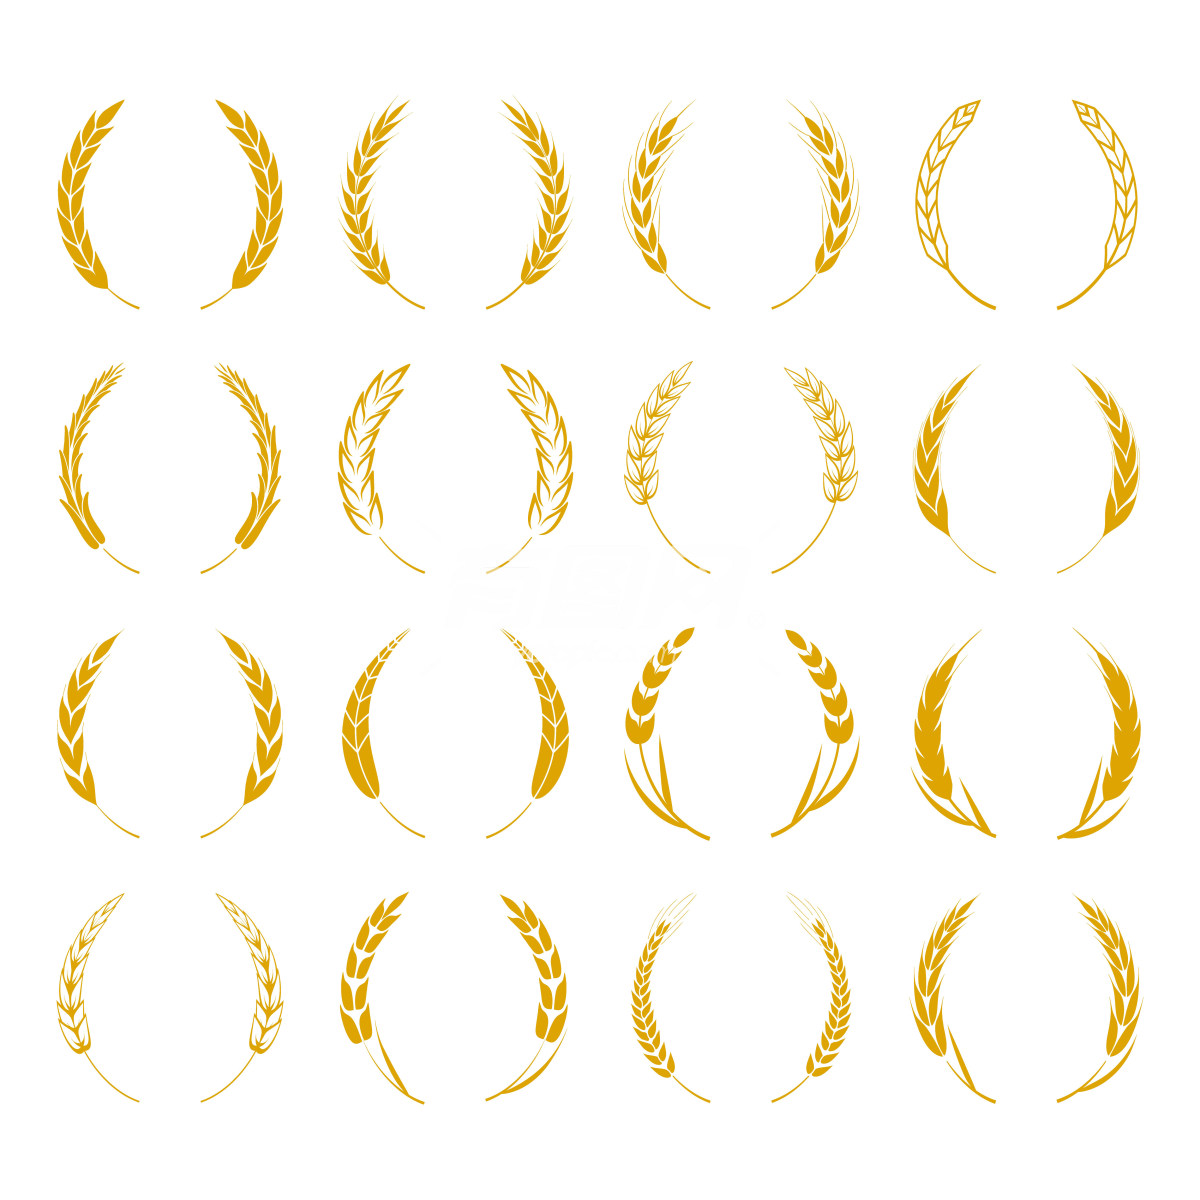 金色麦穗花环logo设计